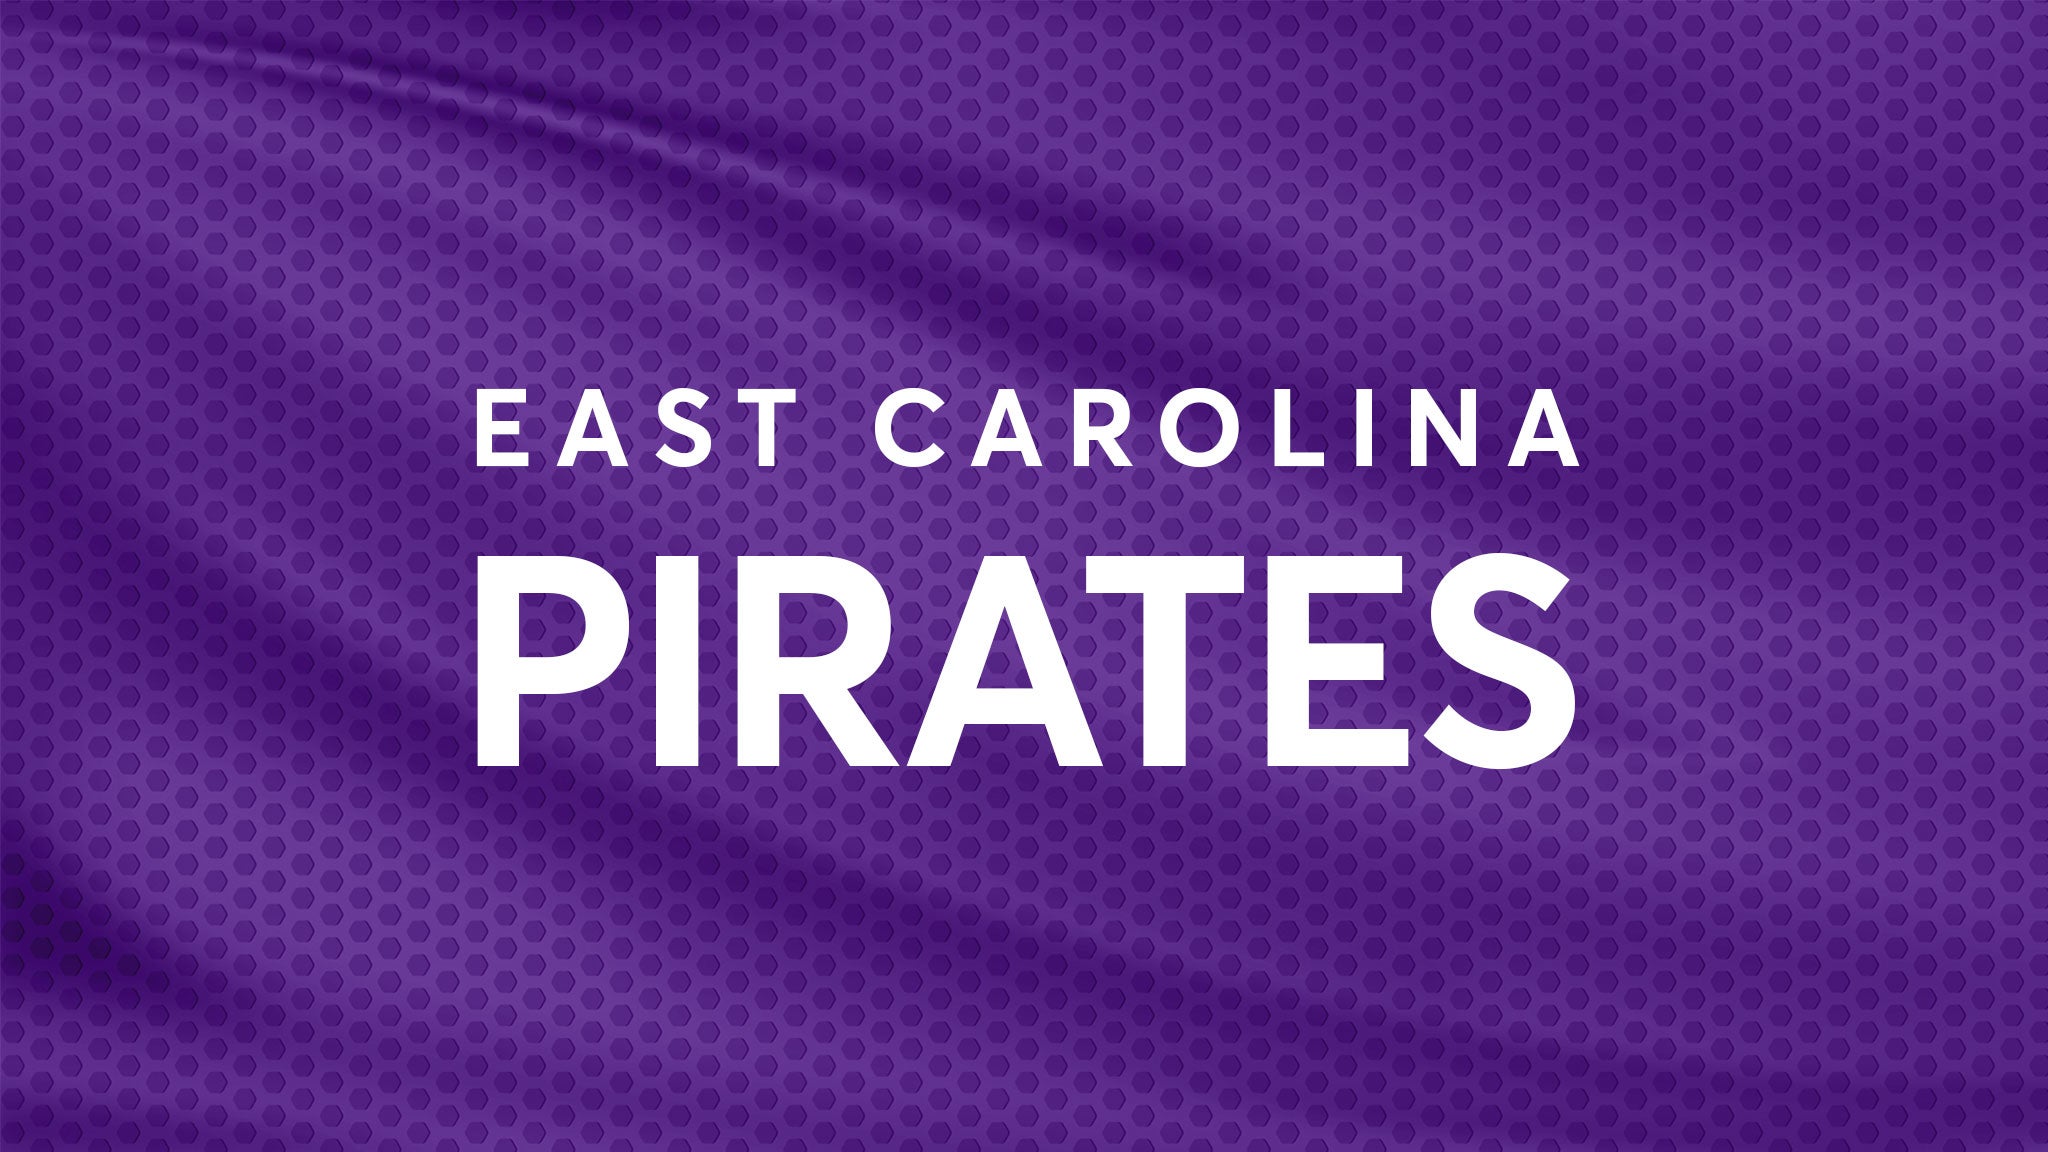 East Carolina Pirates Football vs. Norfolk State Spartans Football hero